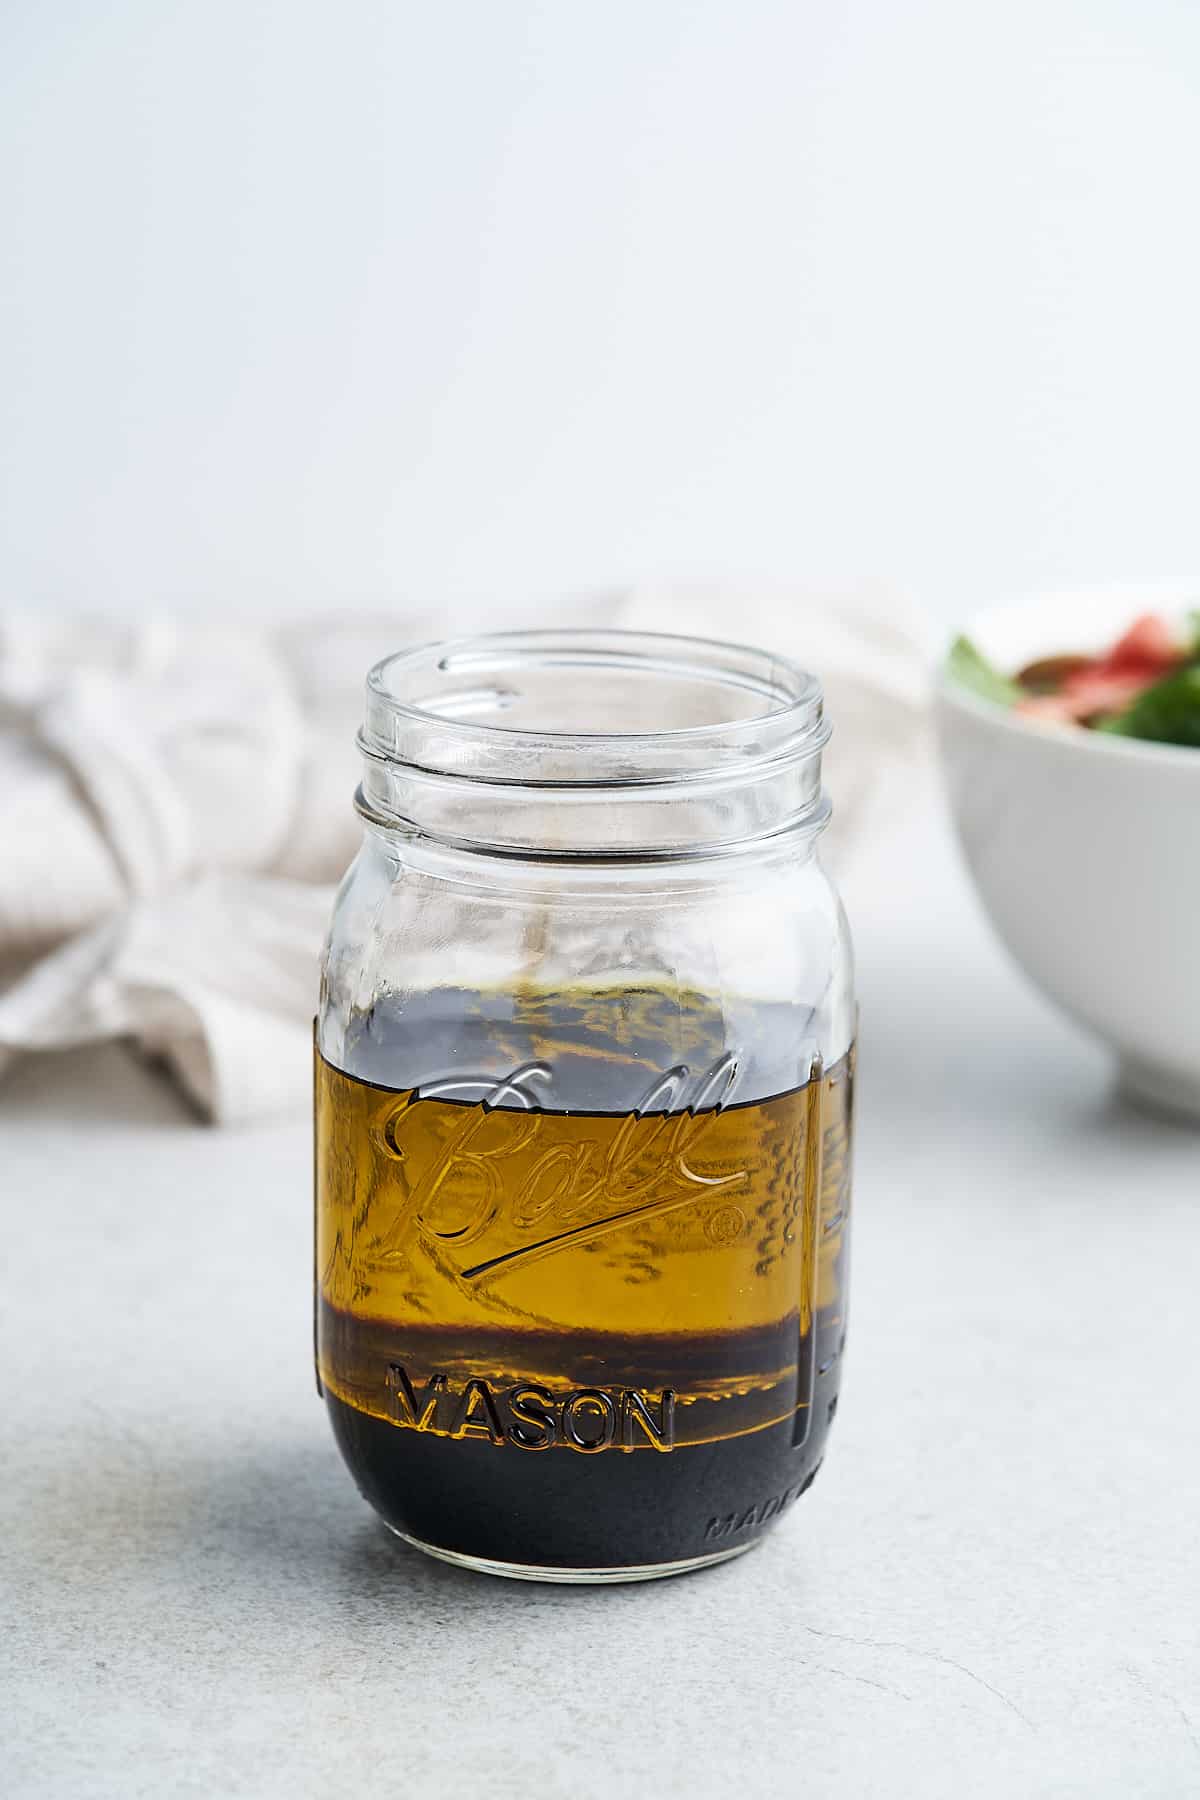 Olive oil and balsamic vinegar in a jar.